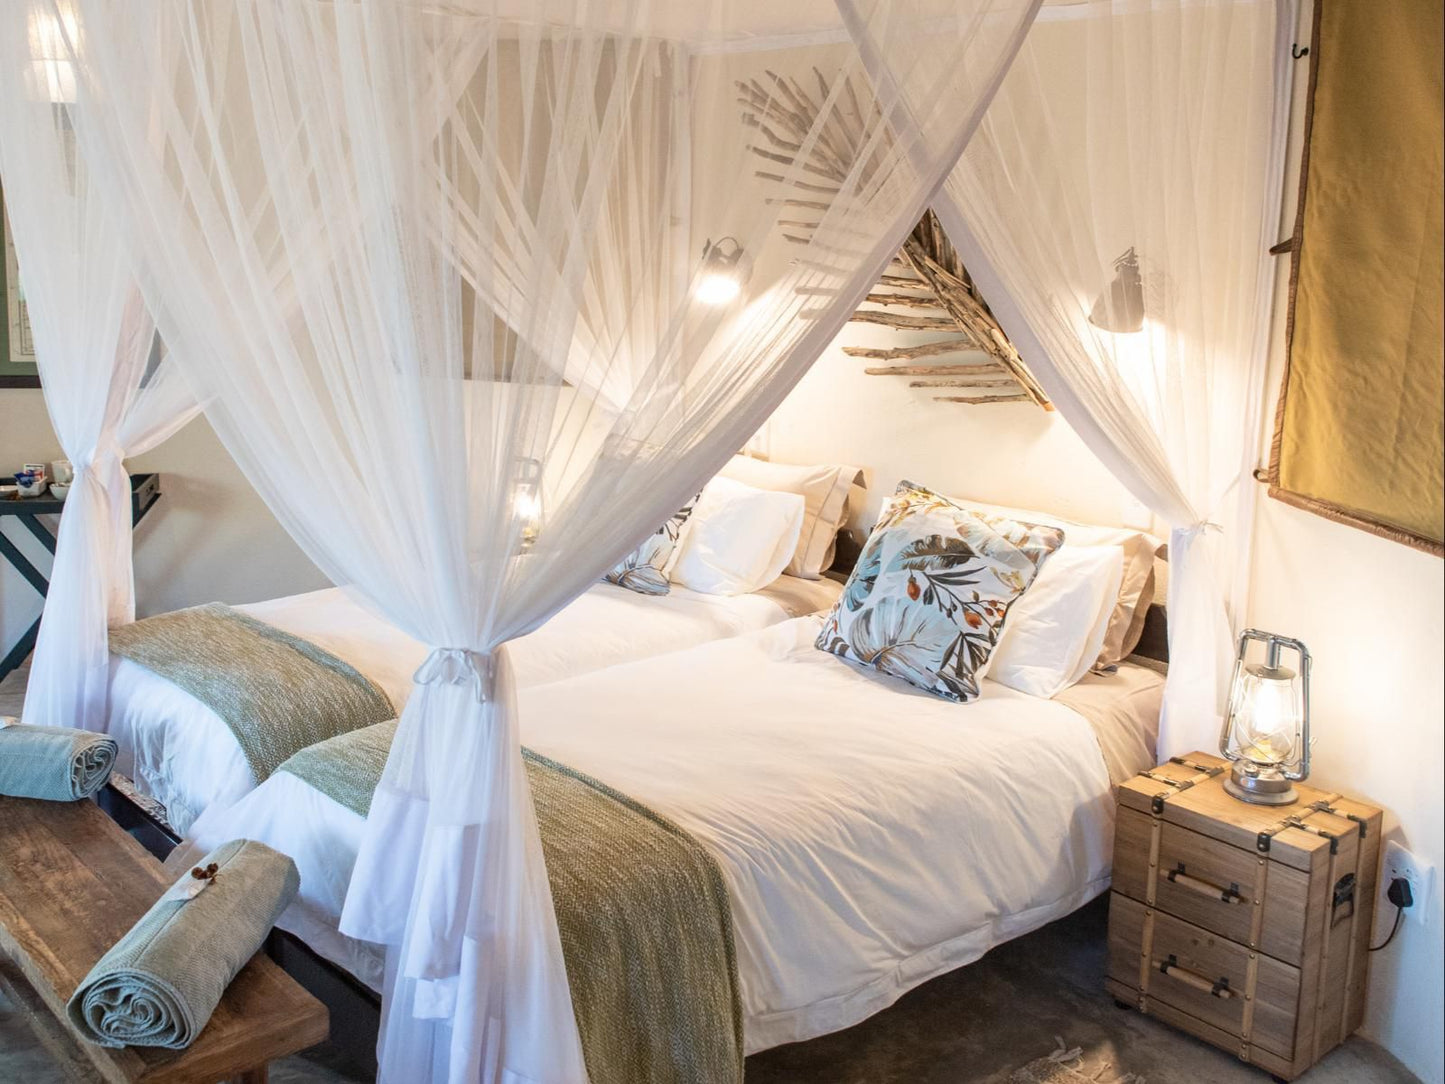 Nyala Safari Lodge Hoedspruit Limpopo Province South Africa Bedroom